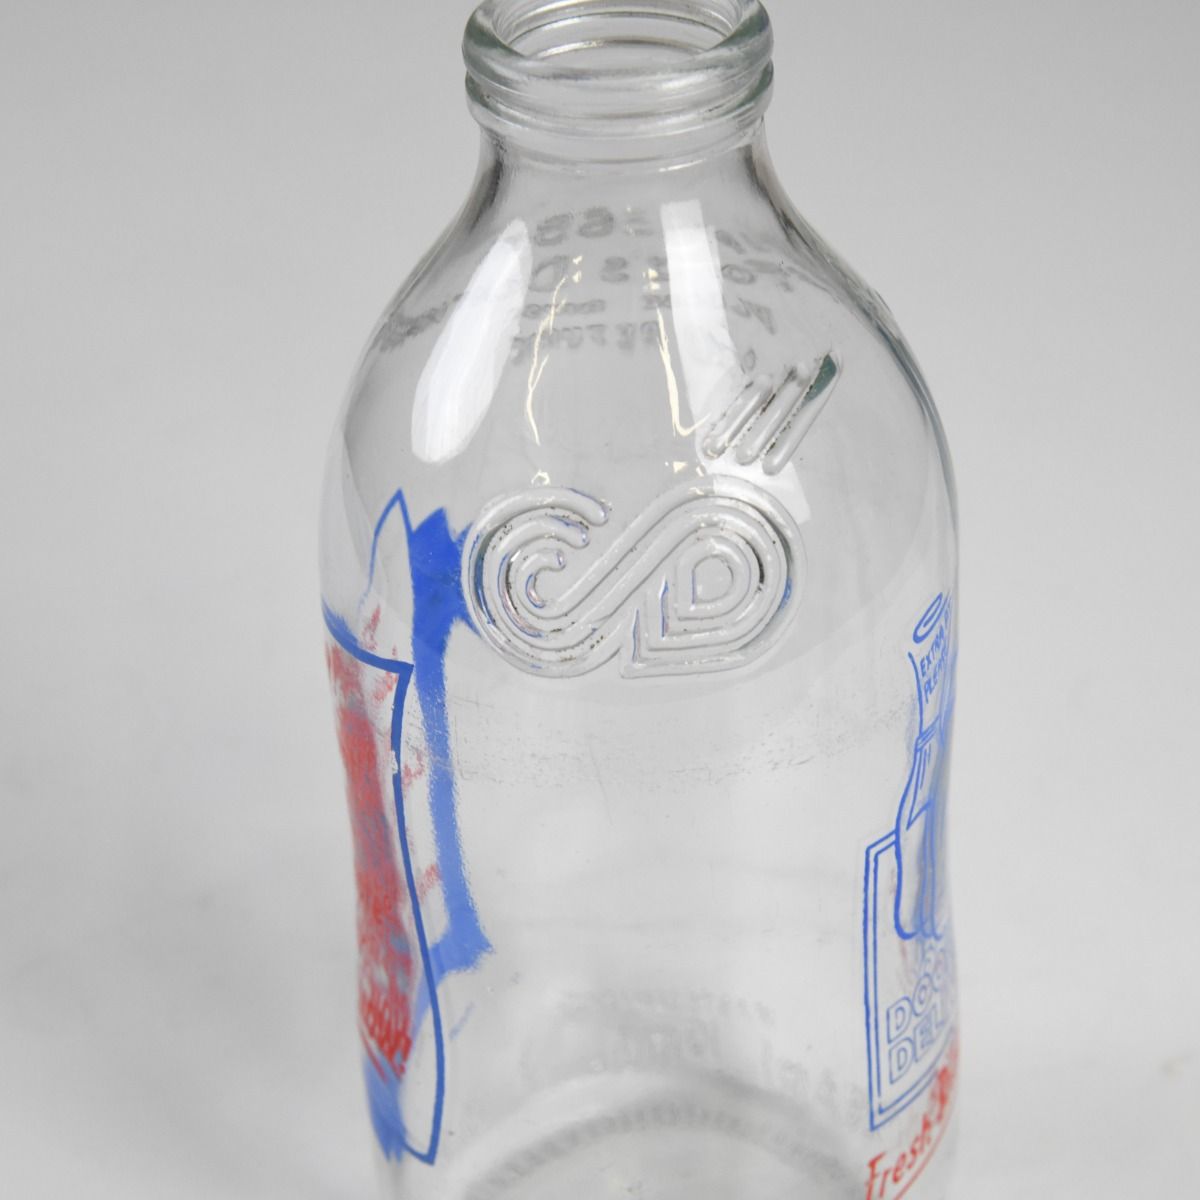 Vintage Advertising Milk Bottle